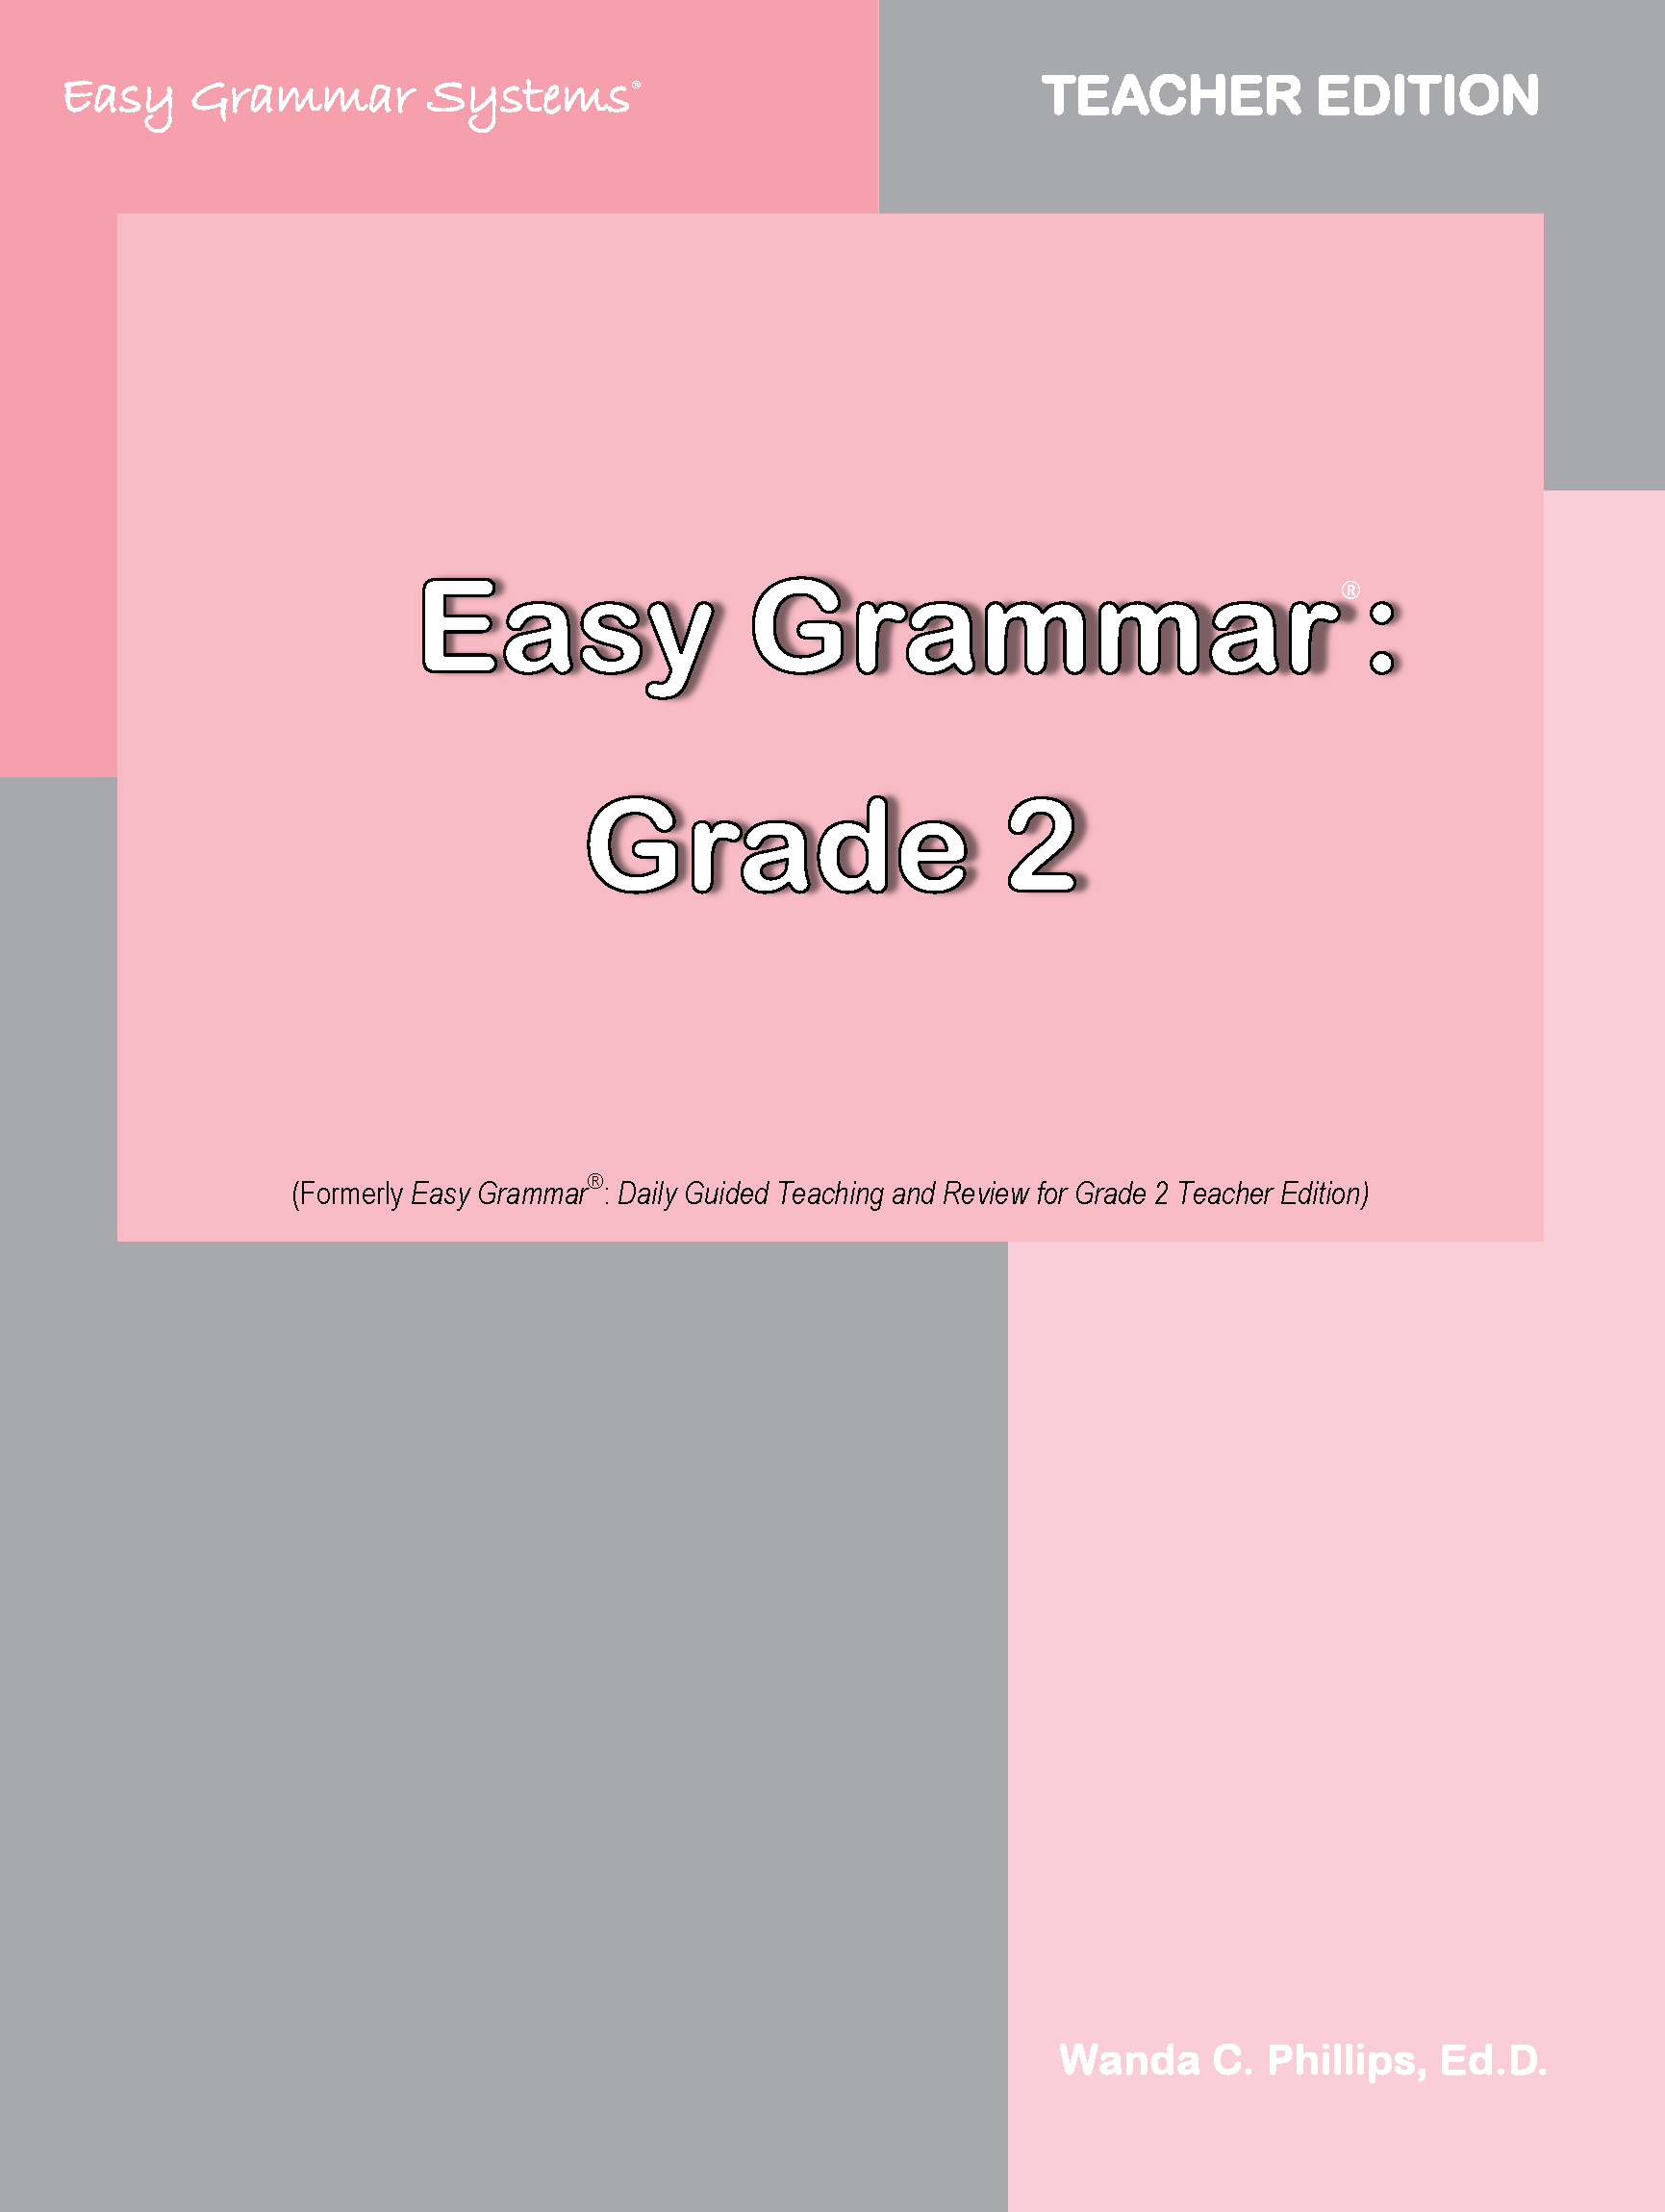 easy-grammar-grade-2-teacher-edition-product-833